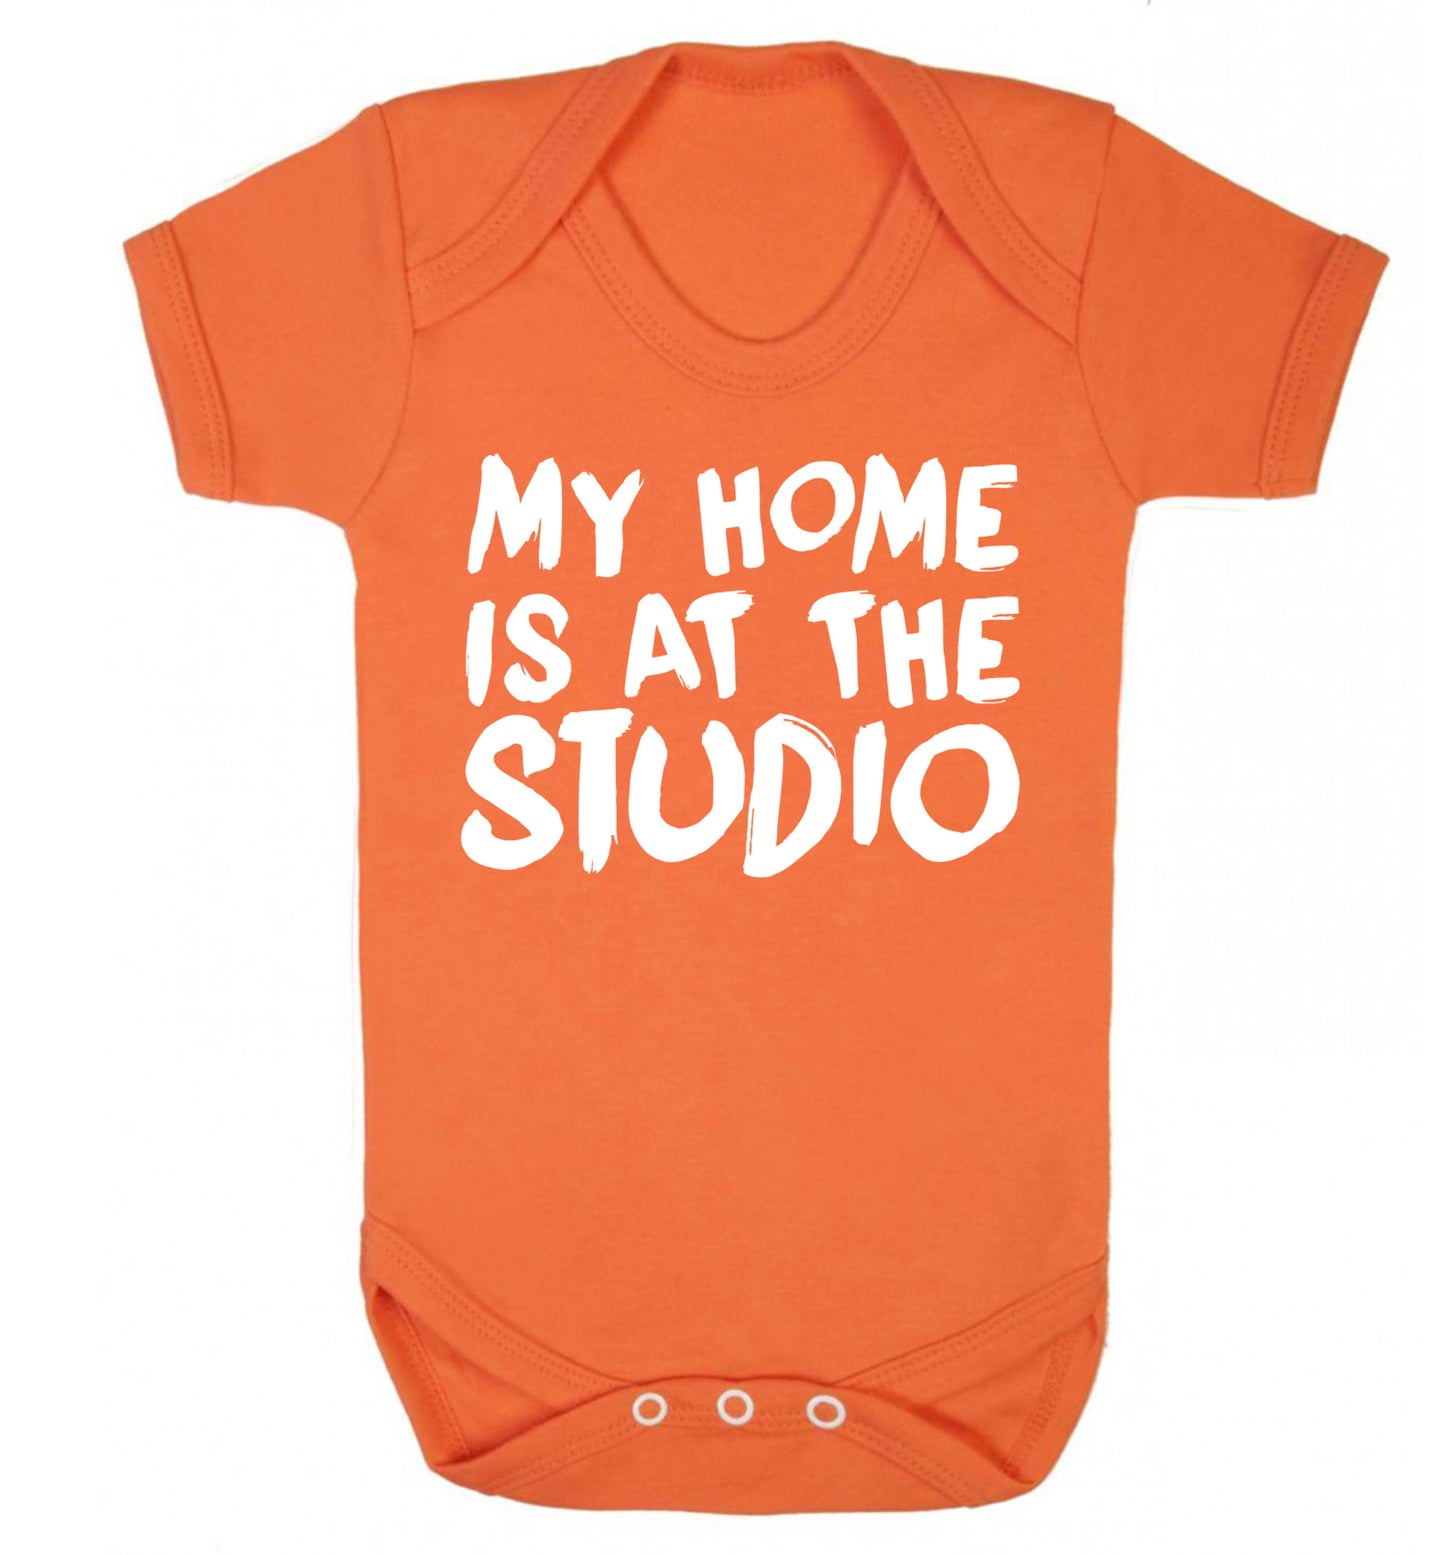 My home is at the studio Baby Vest orange 18-24 months